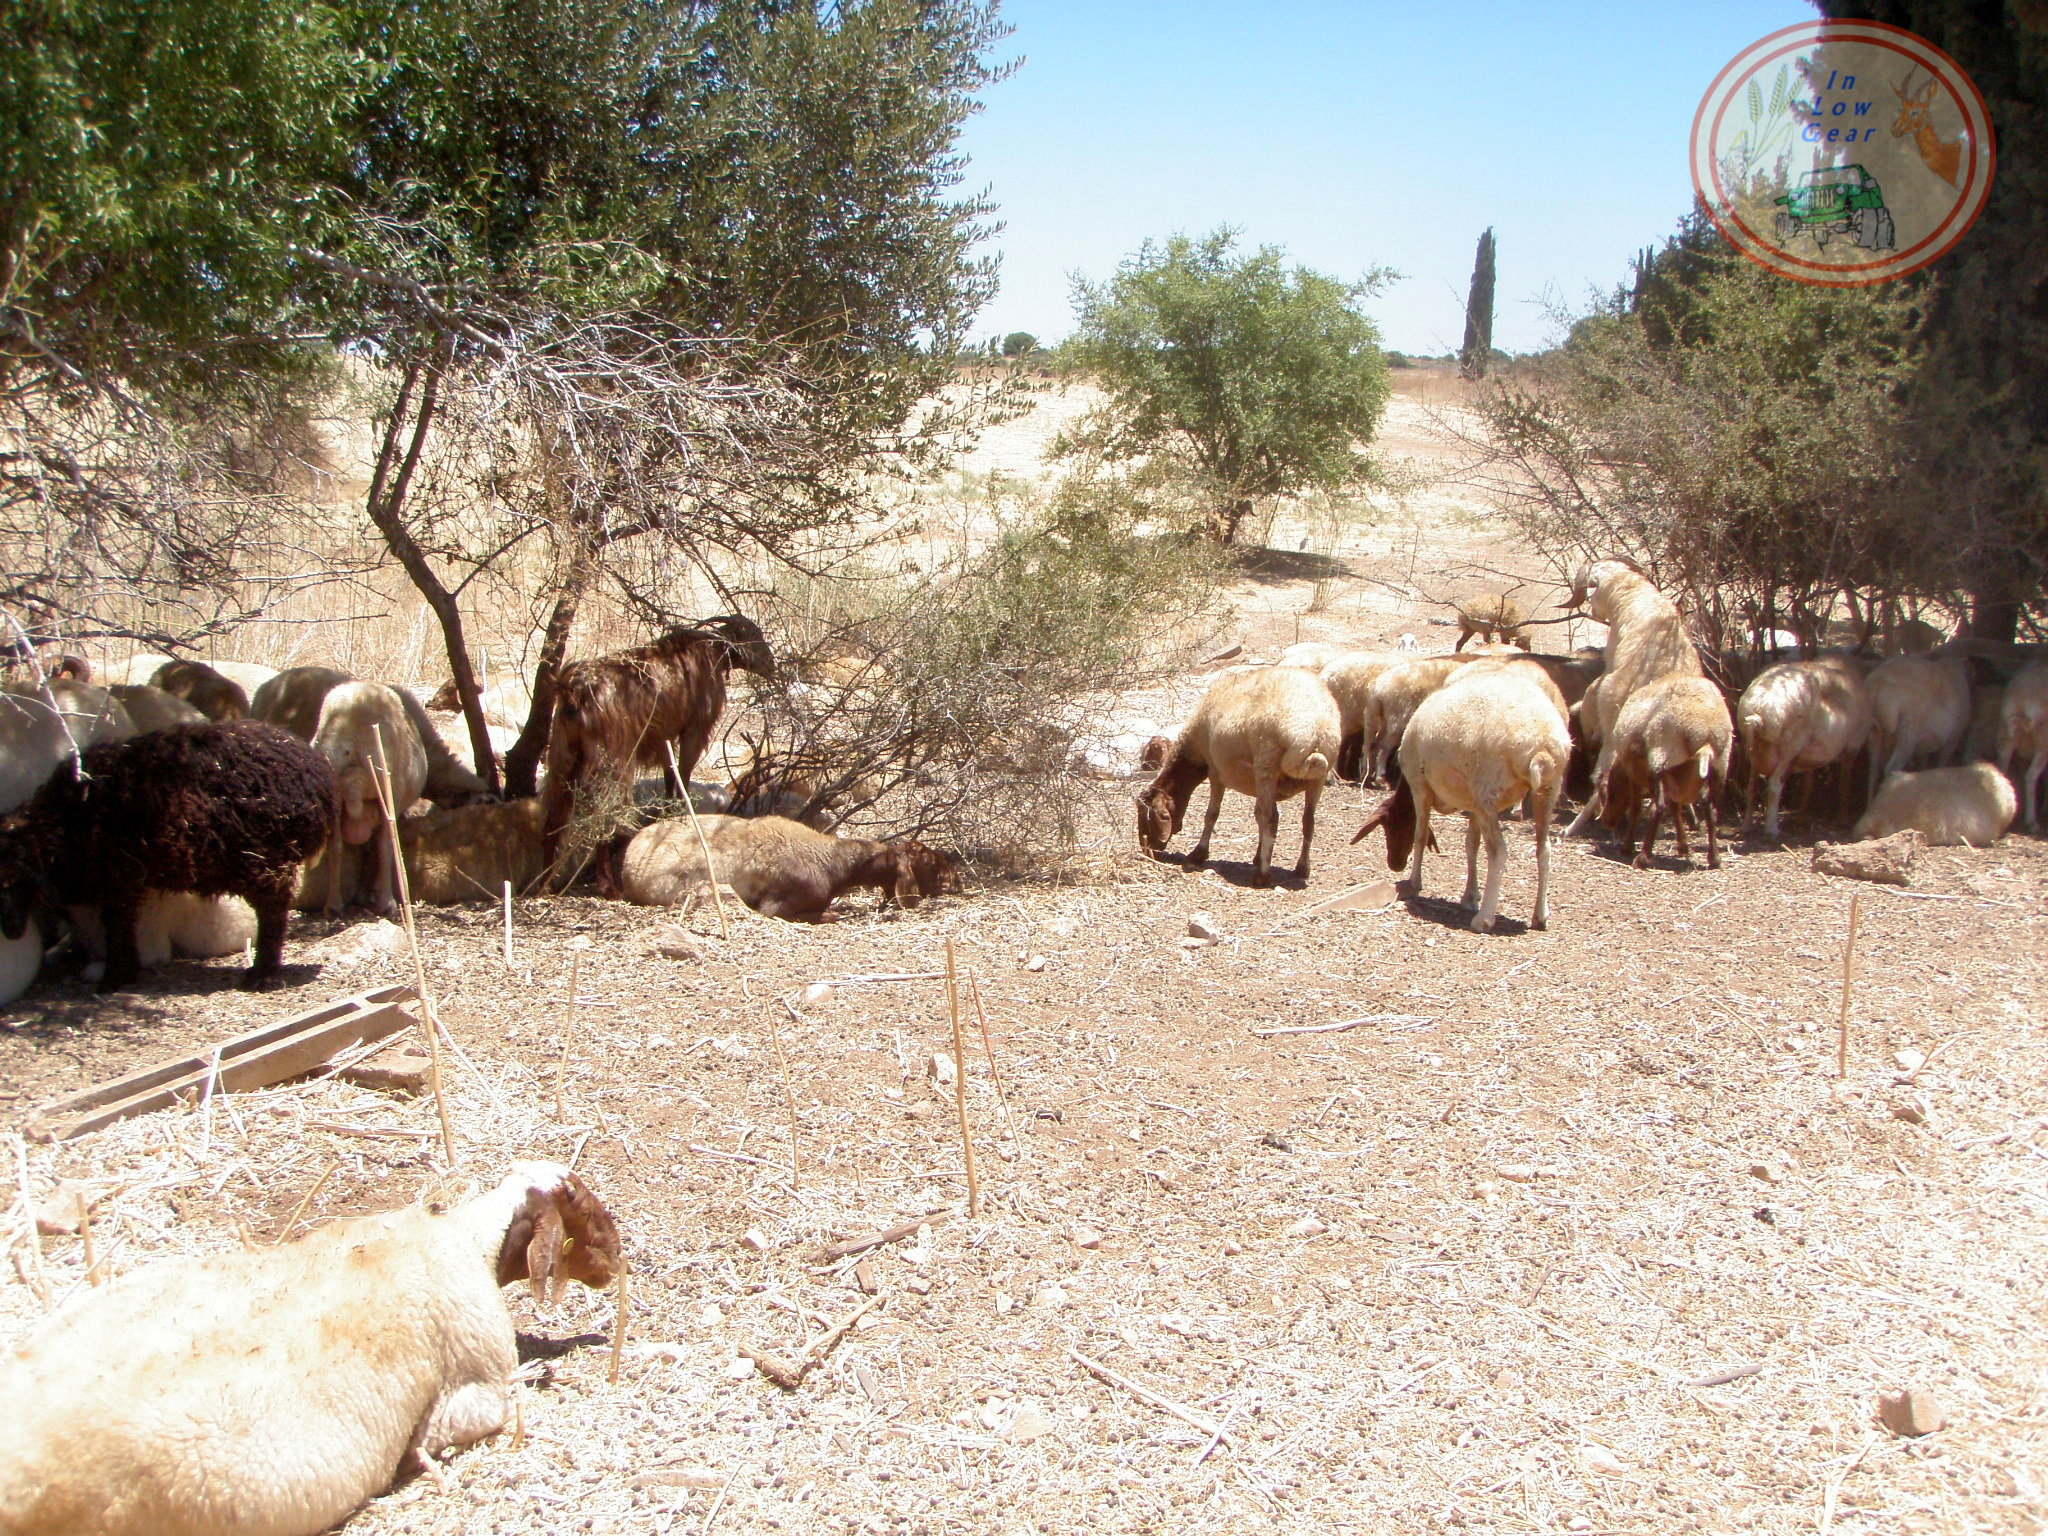 Haella wadi sheep, as in King david time. כבשים בעמק האלה כבתקופת דוד המלך